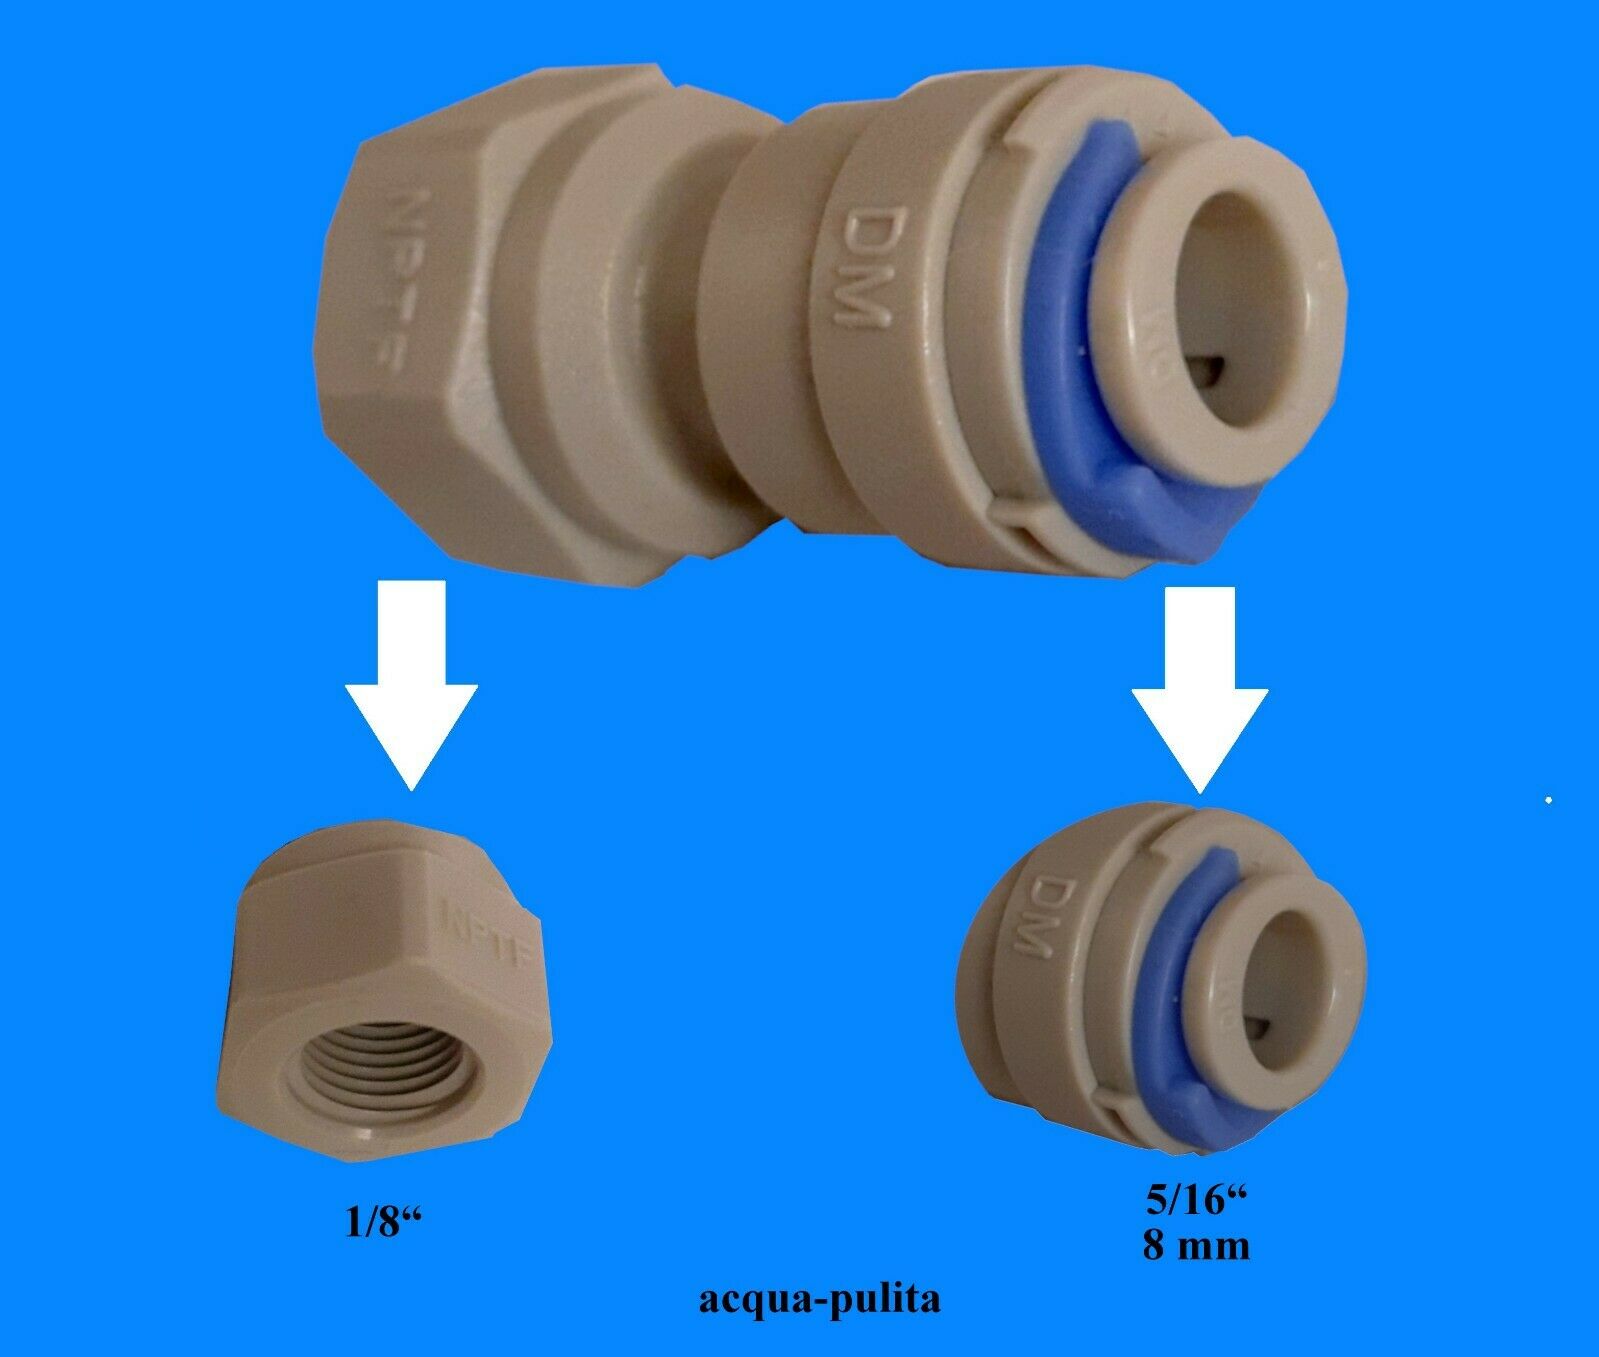 Raccordo dritto femmina 1/8"x5/16" (8mm) innesto rapido per depuratore ad osmosi inversa